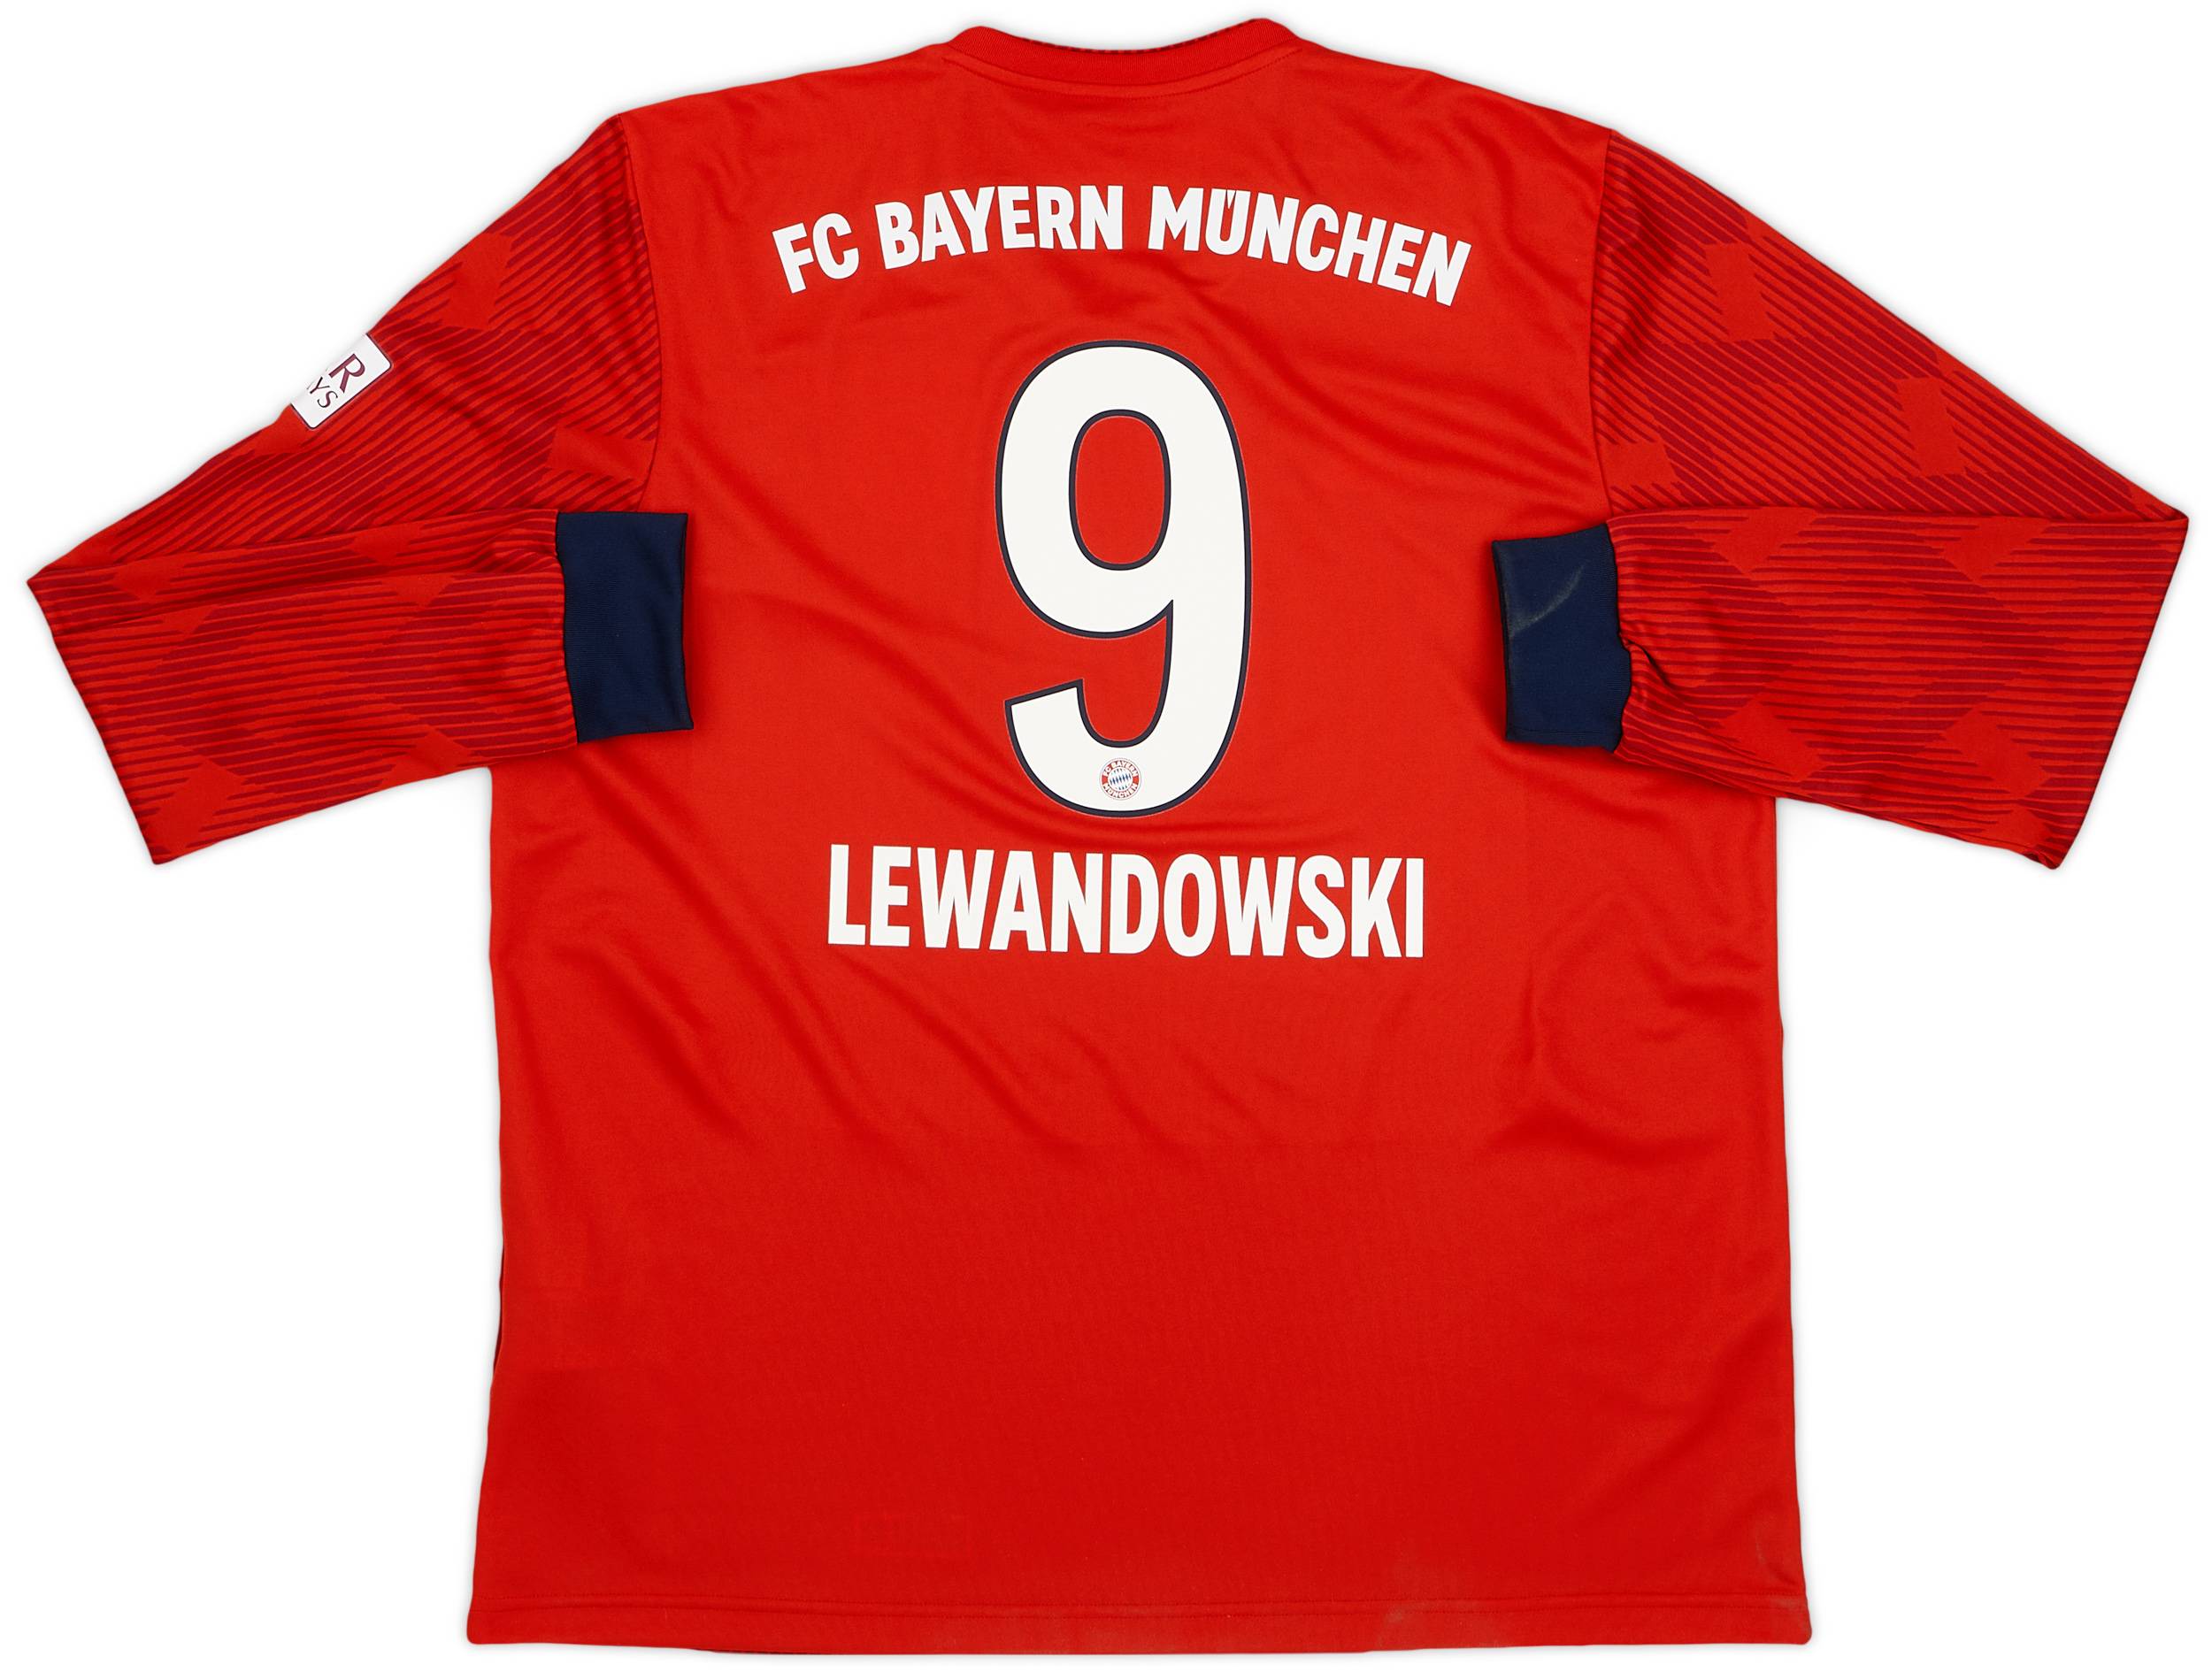 2018-19 Bayern Munich Home Shirt Lewandowski #9 - 8/10 - (XL)